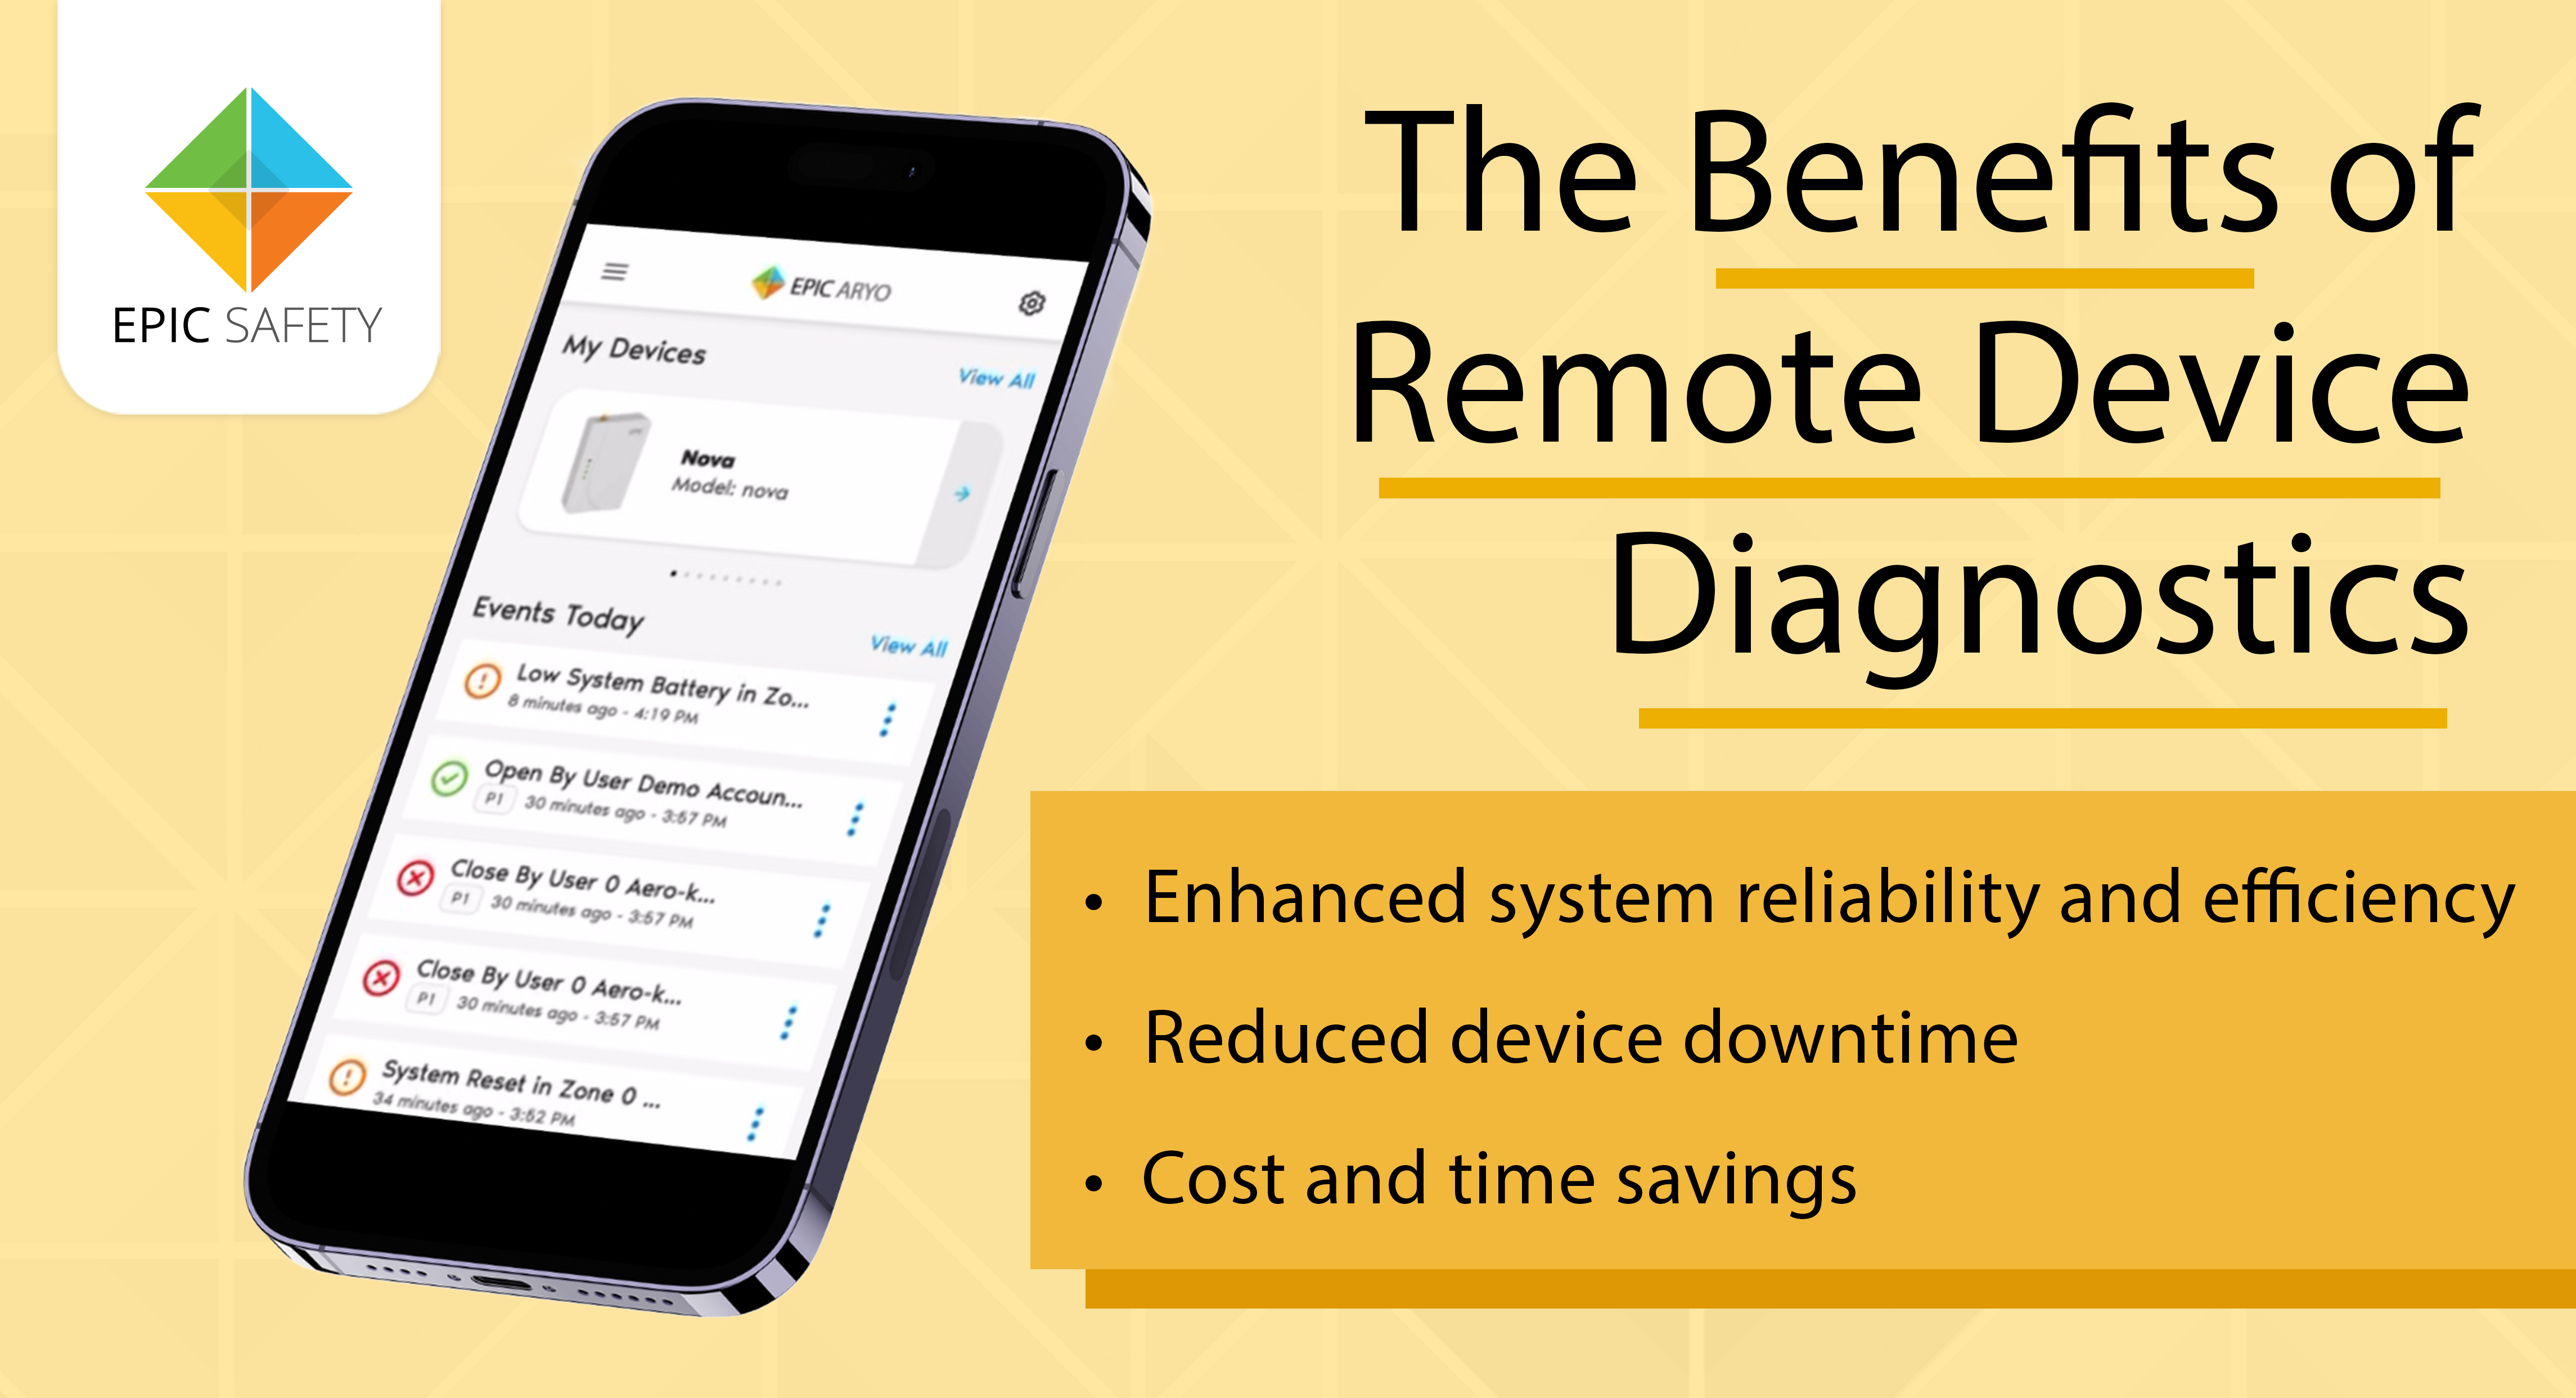 The Benefits of Remote Device Diagnostics